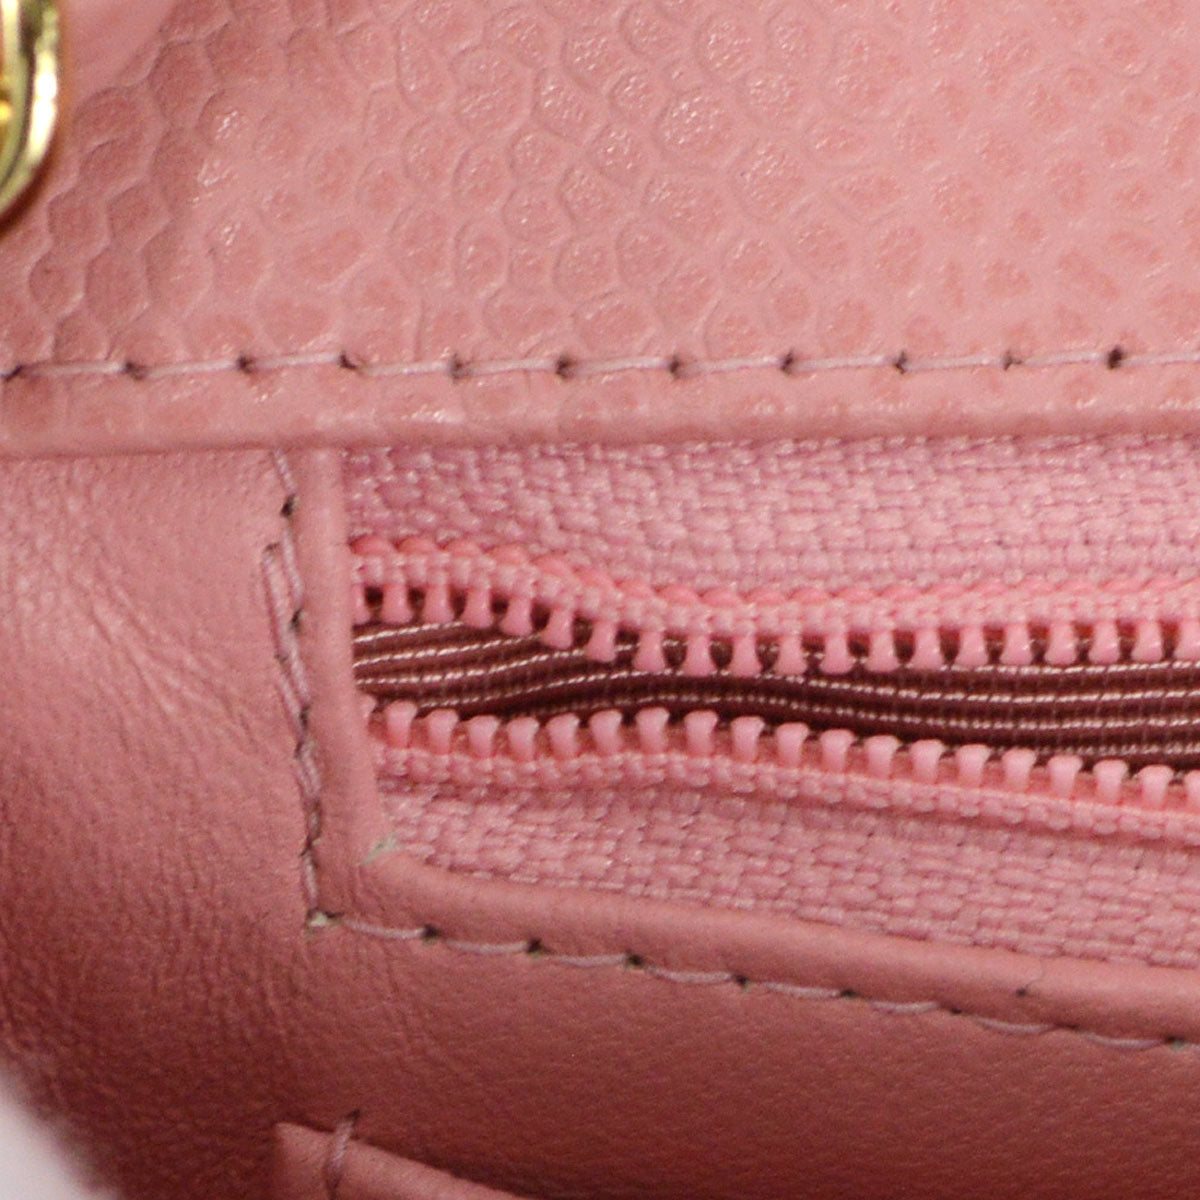 Chanel Pink Caviar Skin Mini Classic Square Flap Bag 17 8666758